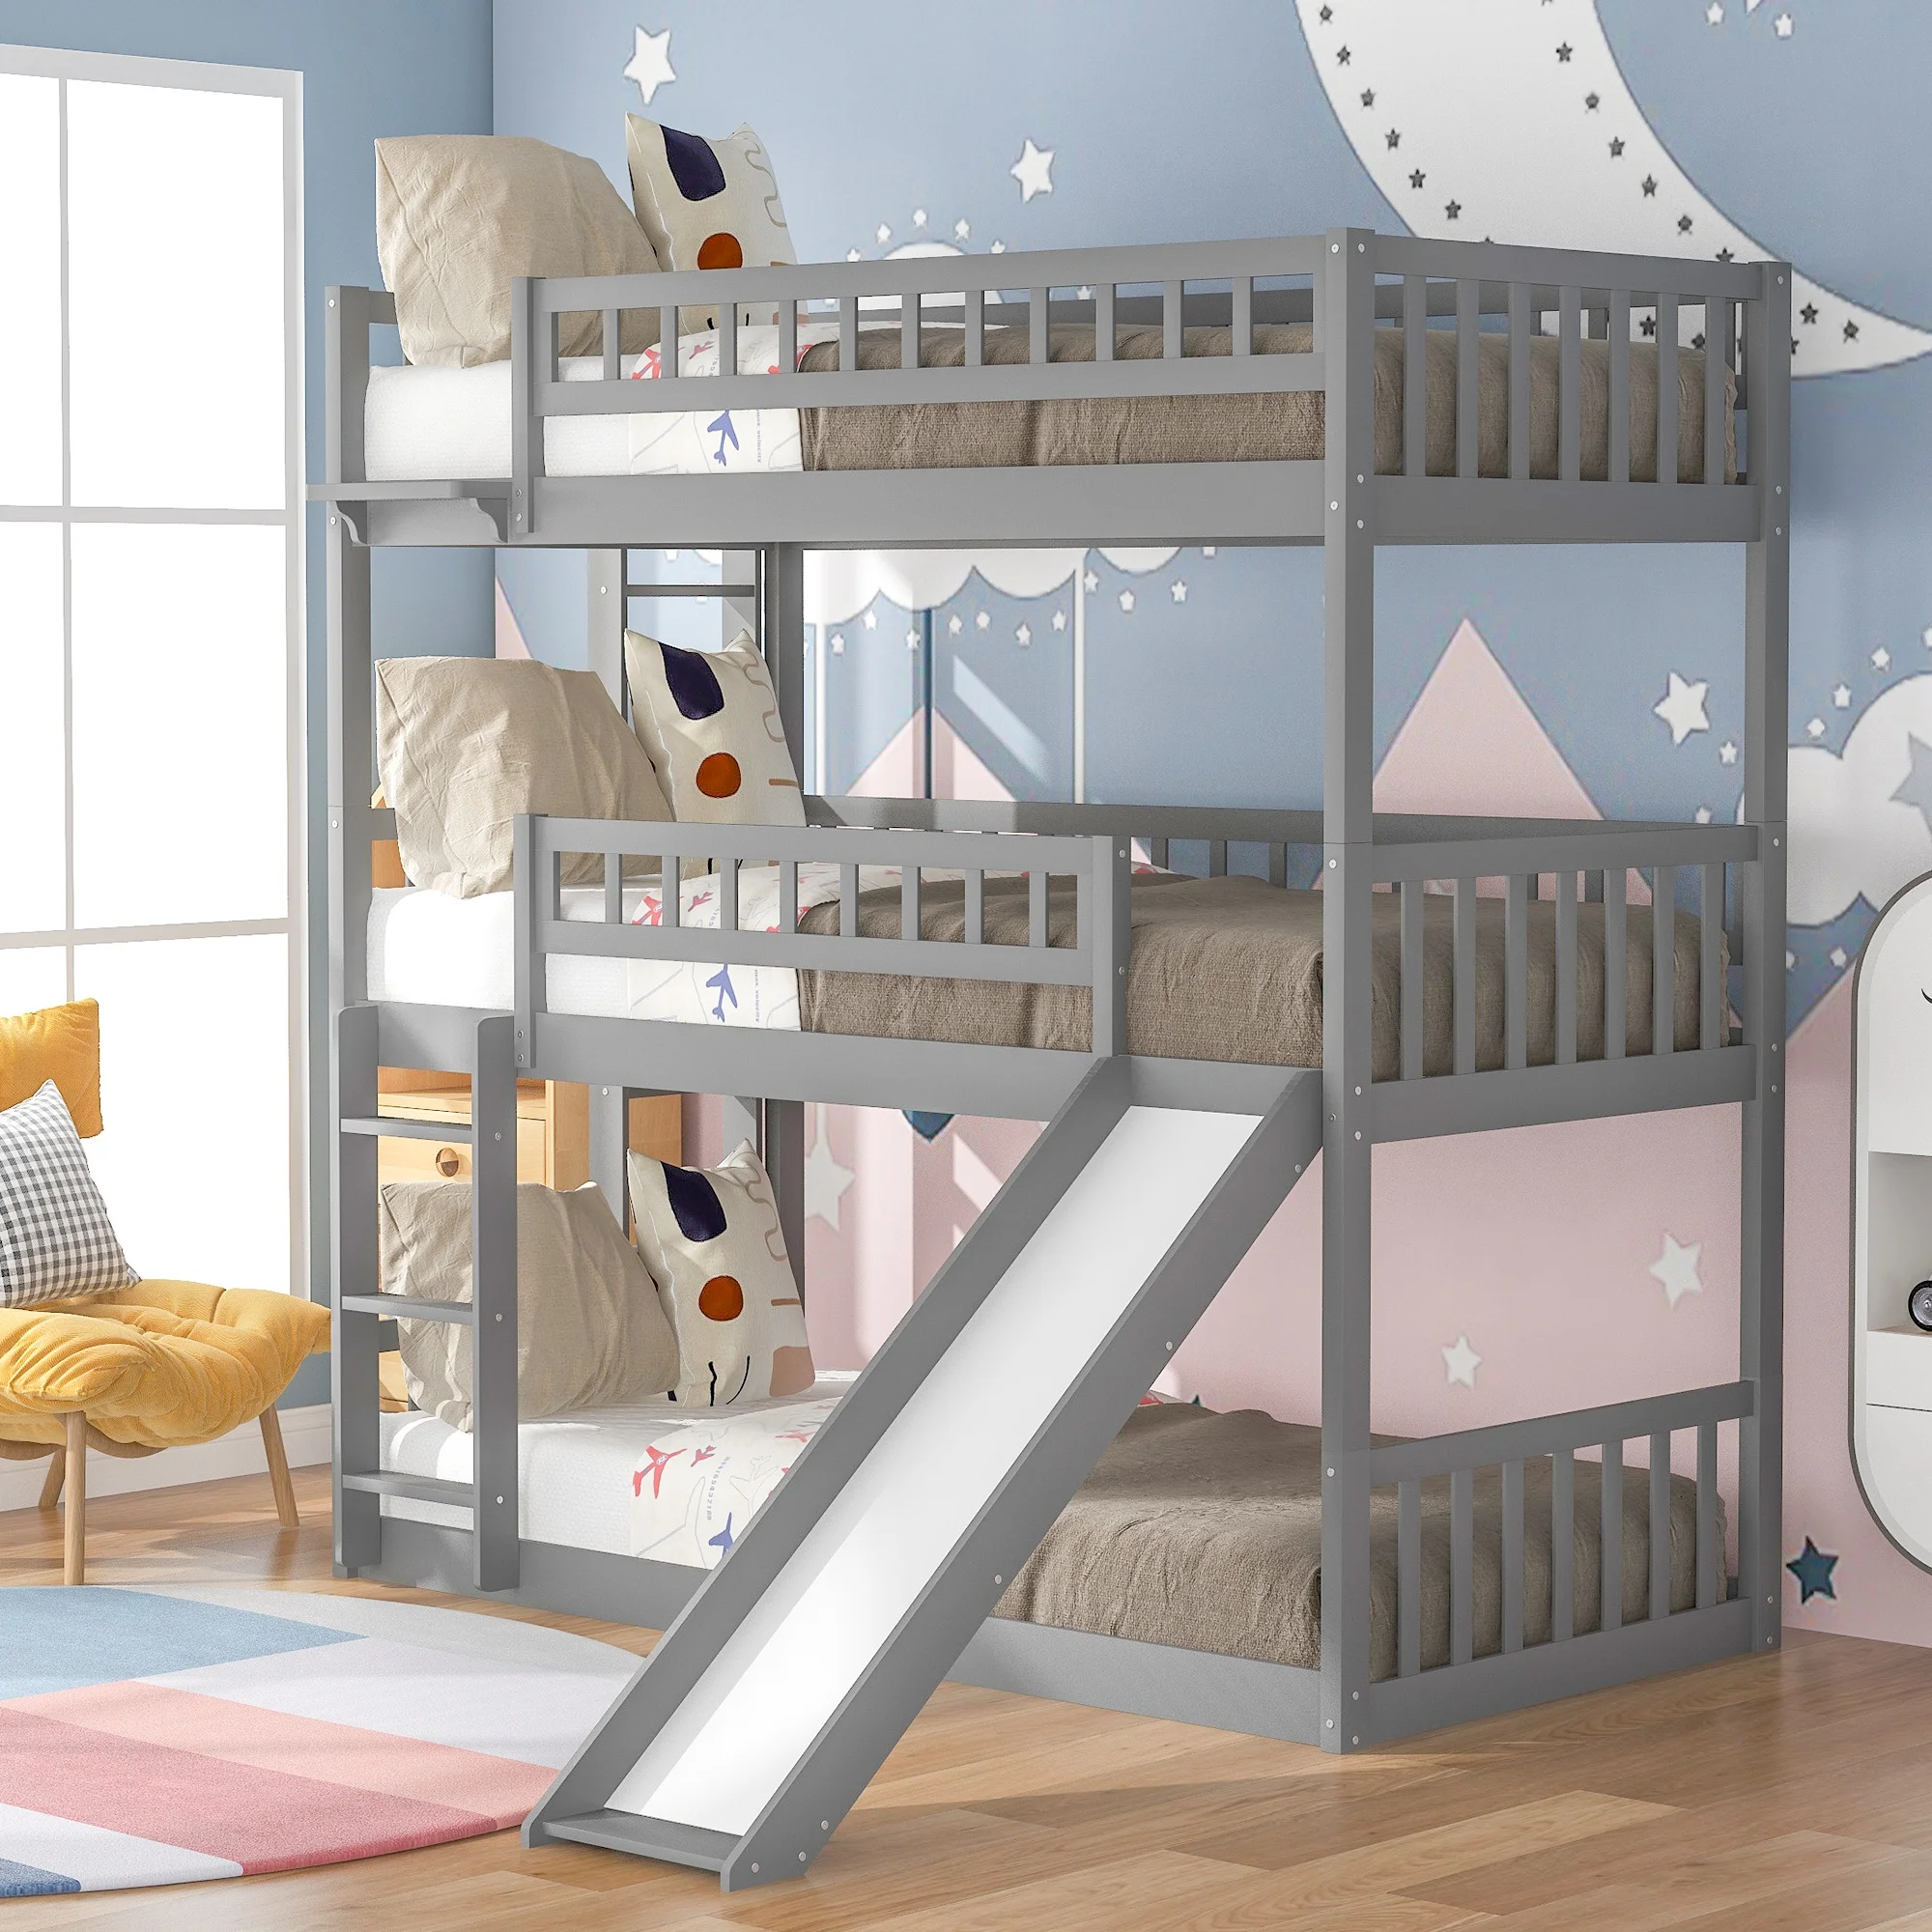 

Home Modern And Minimalist Wooden Bedroom Furniture Beds Frames Bases Built-in Ladder Slide Triple Bunk Bed With Guardrails Gray